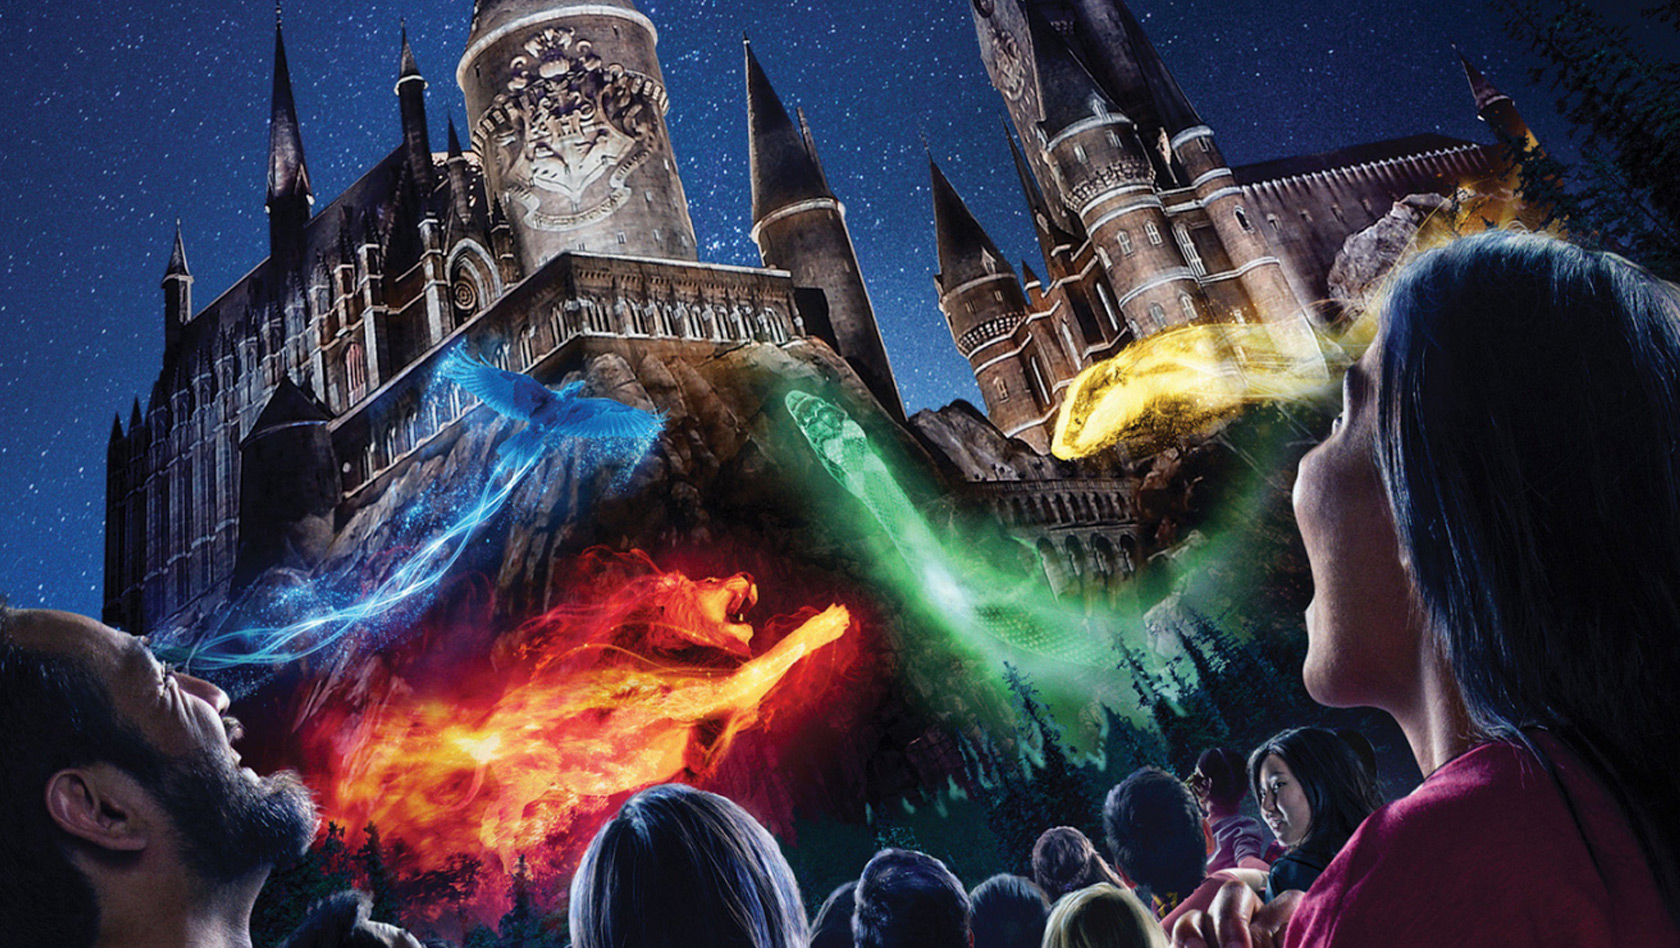 Hogwarts Universal Studios HOllywood Show Nacht 2017 Artwork